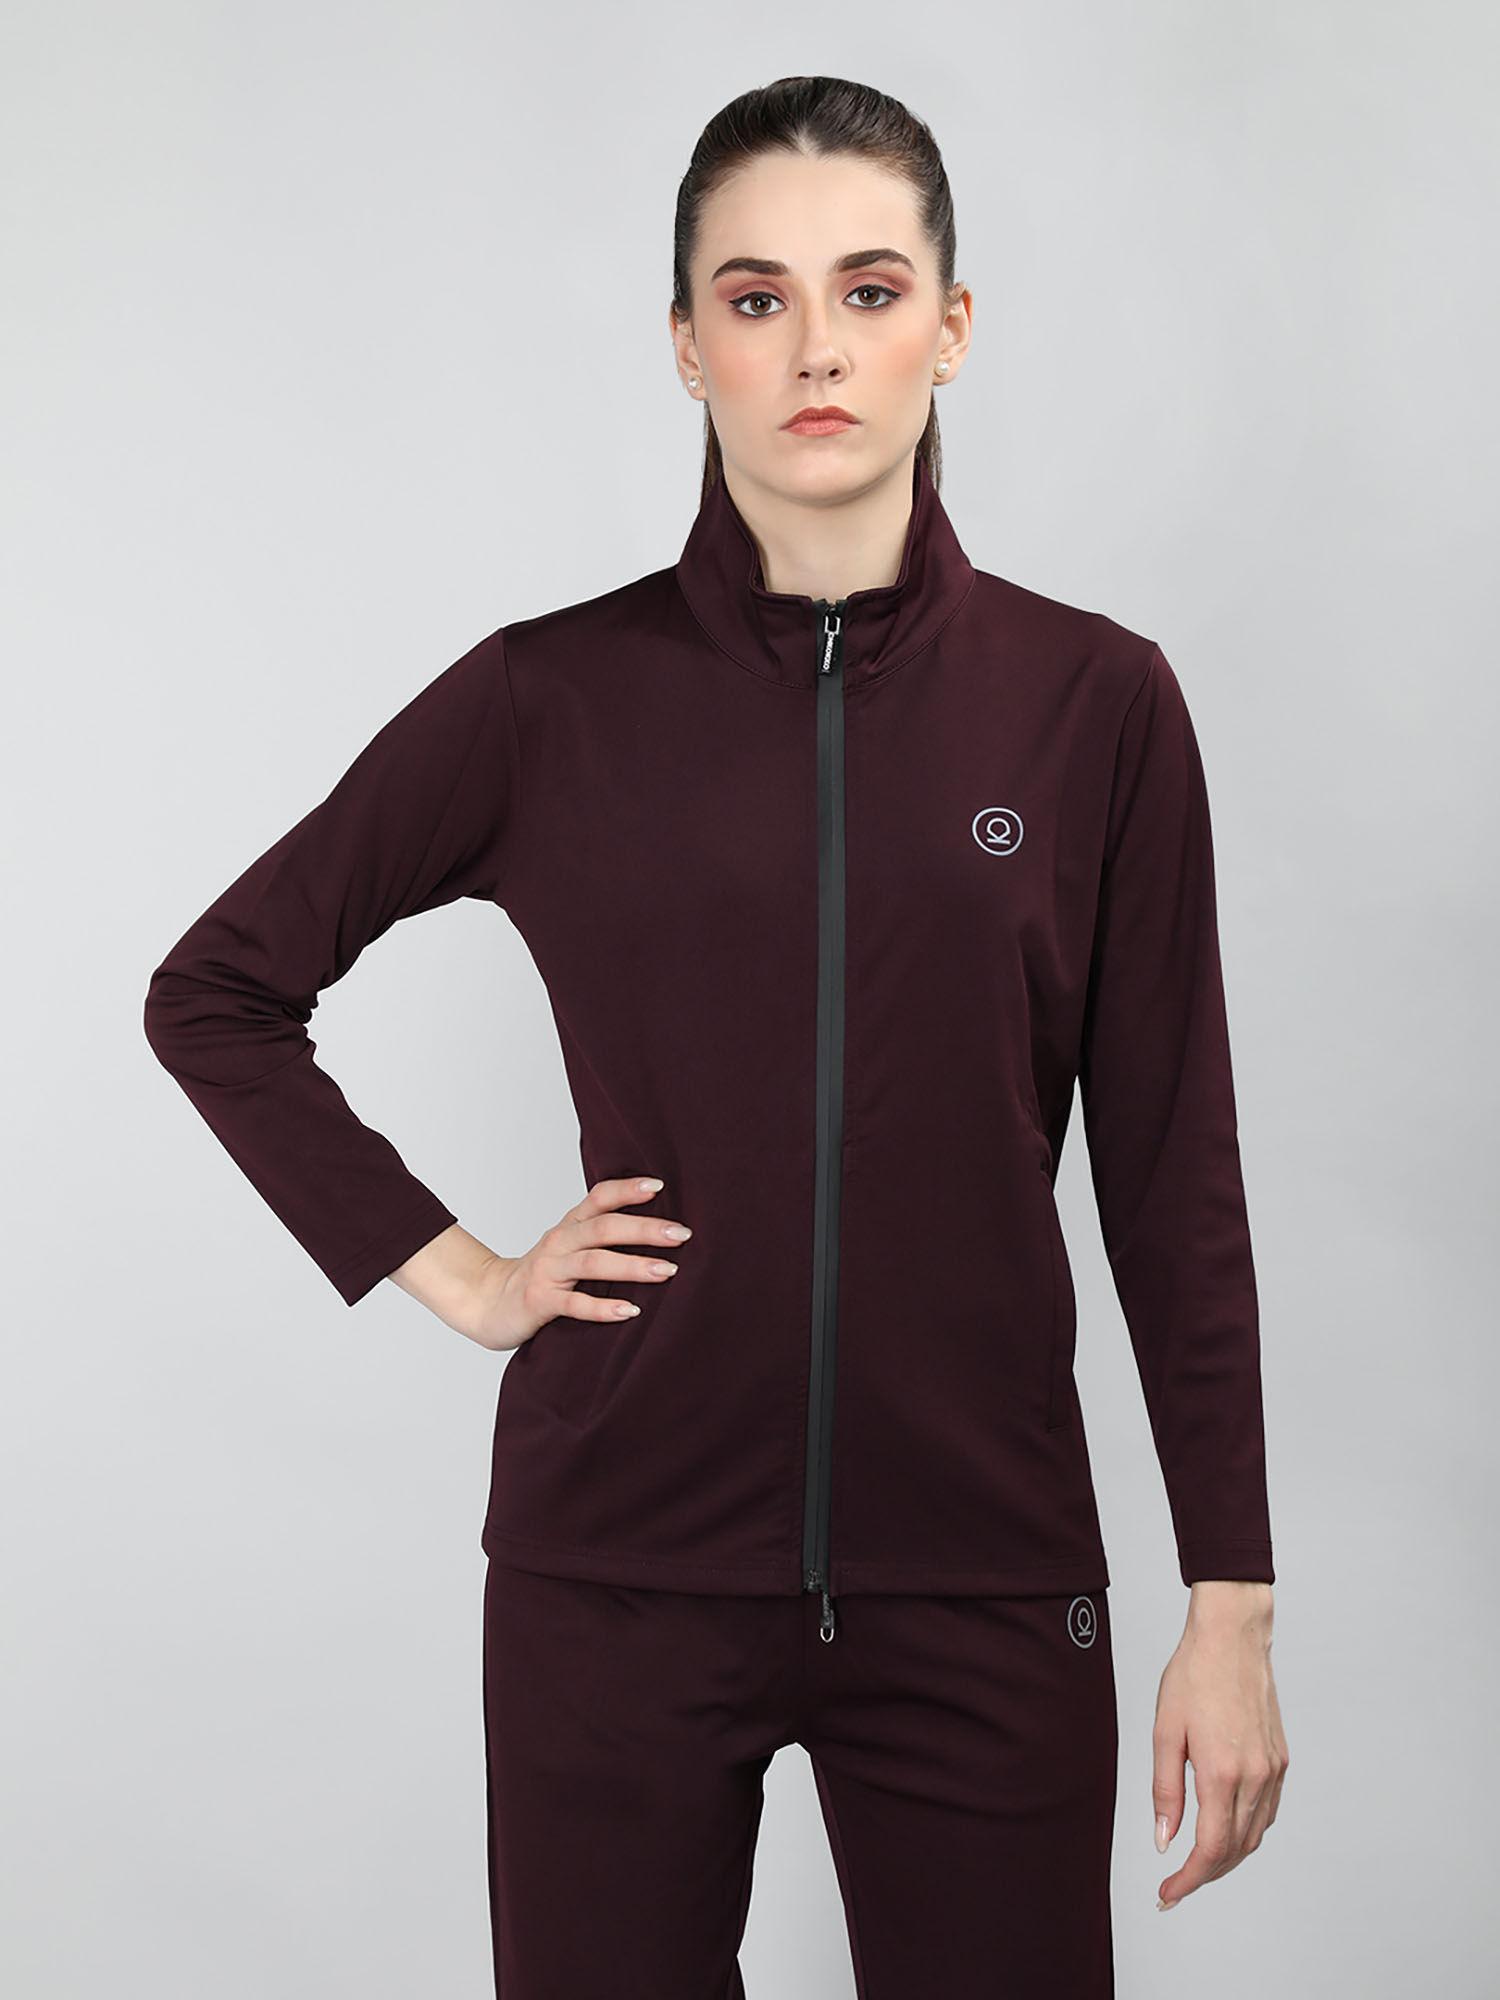 women winter sports zipper stylish jacket-wine